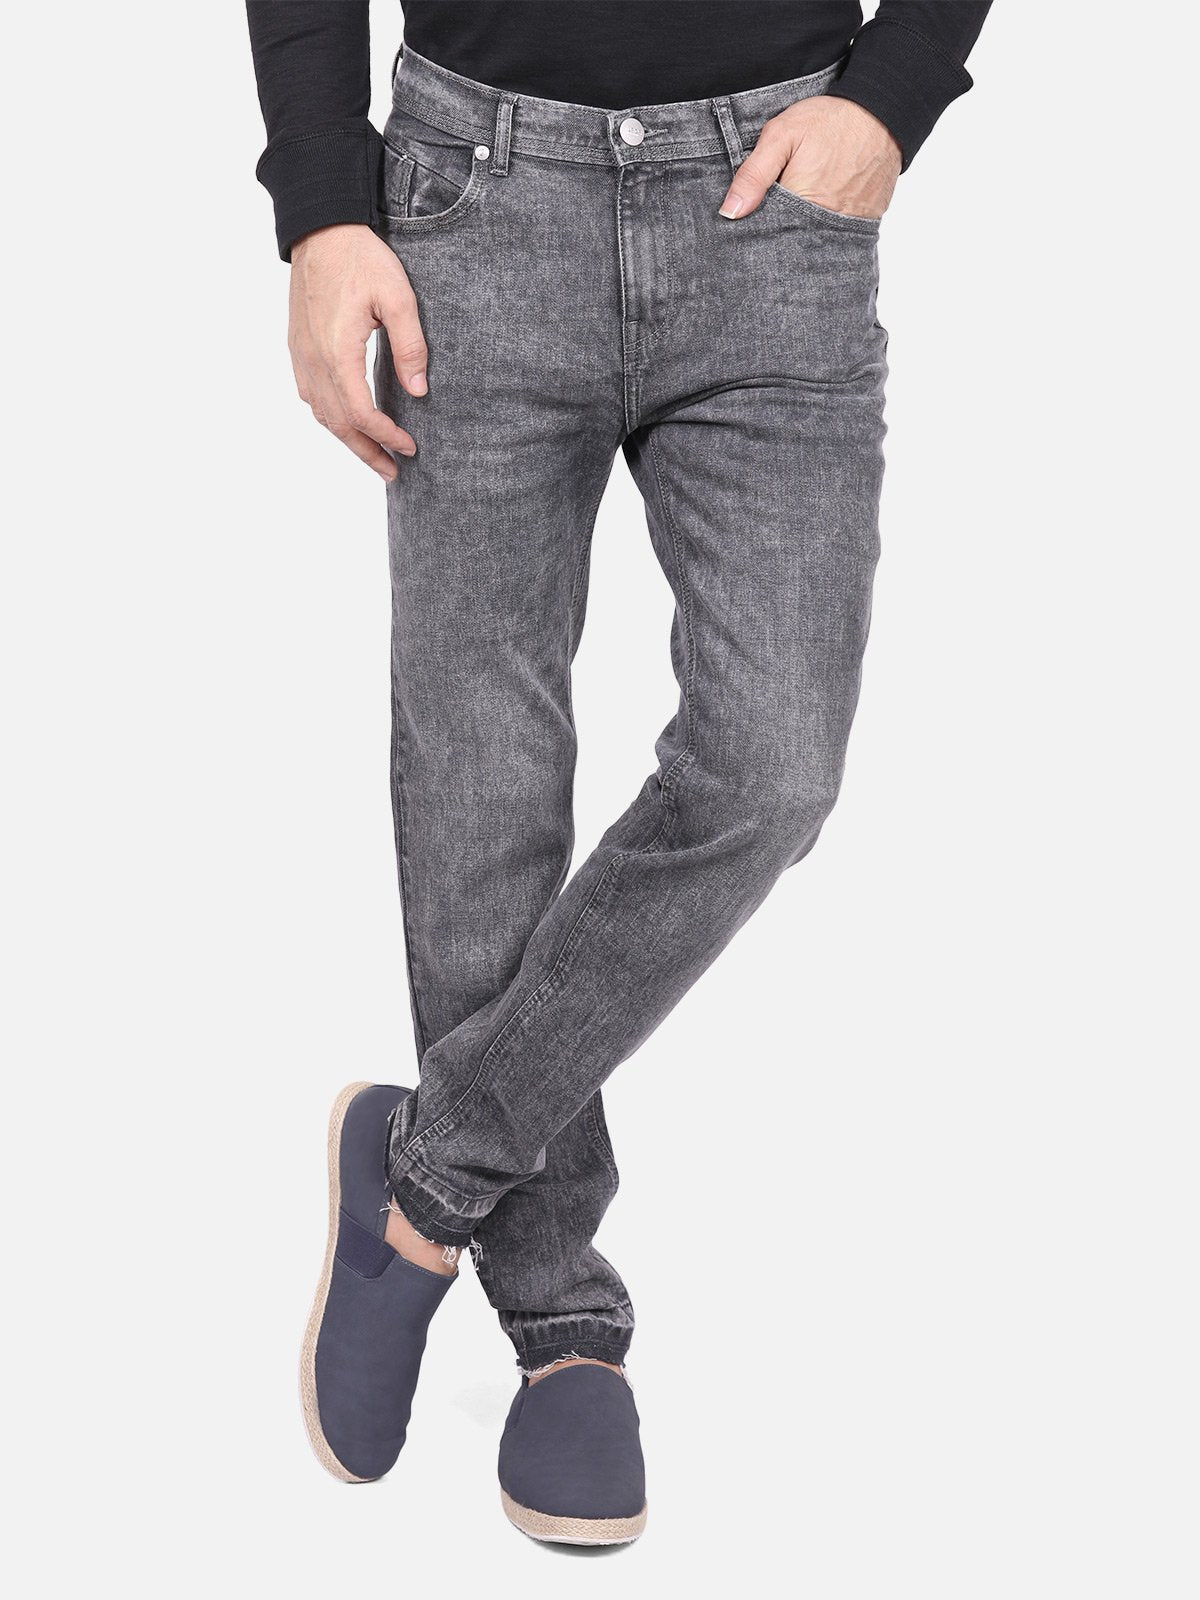 Men's Dark Grey Denim Jeans - FMBP18-031